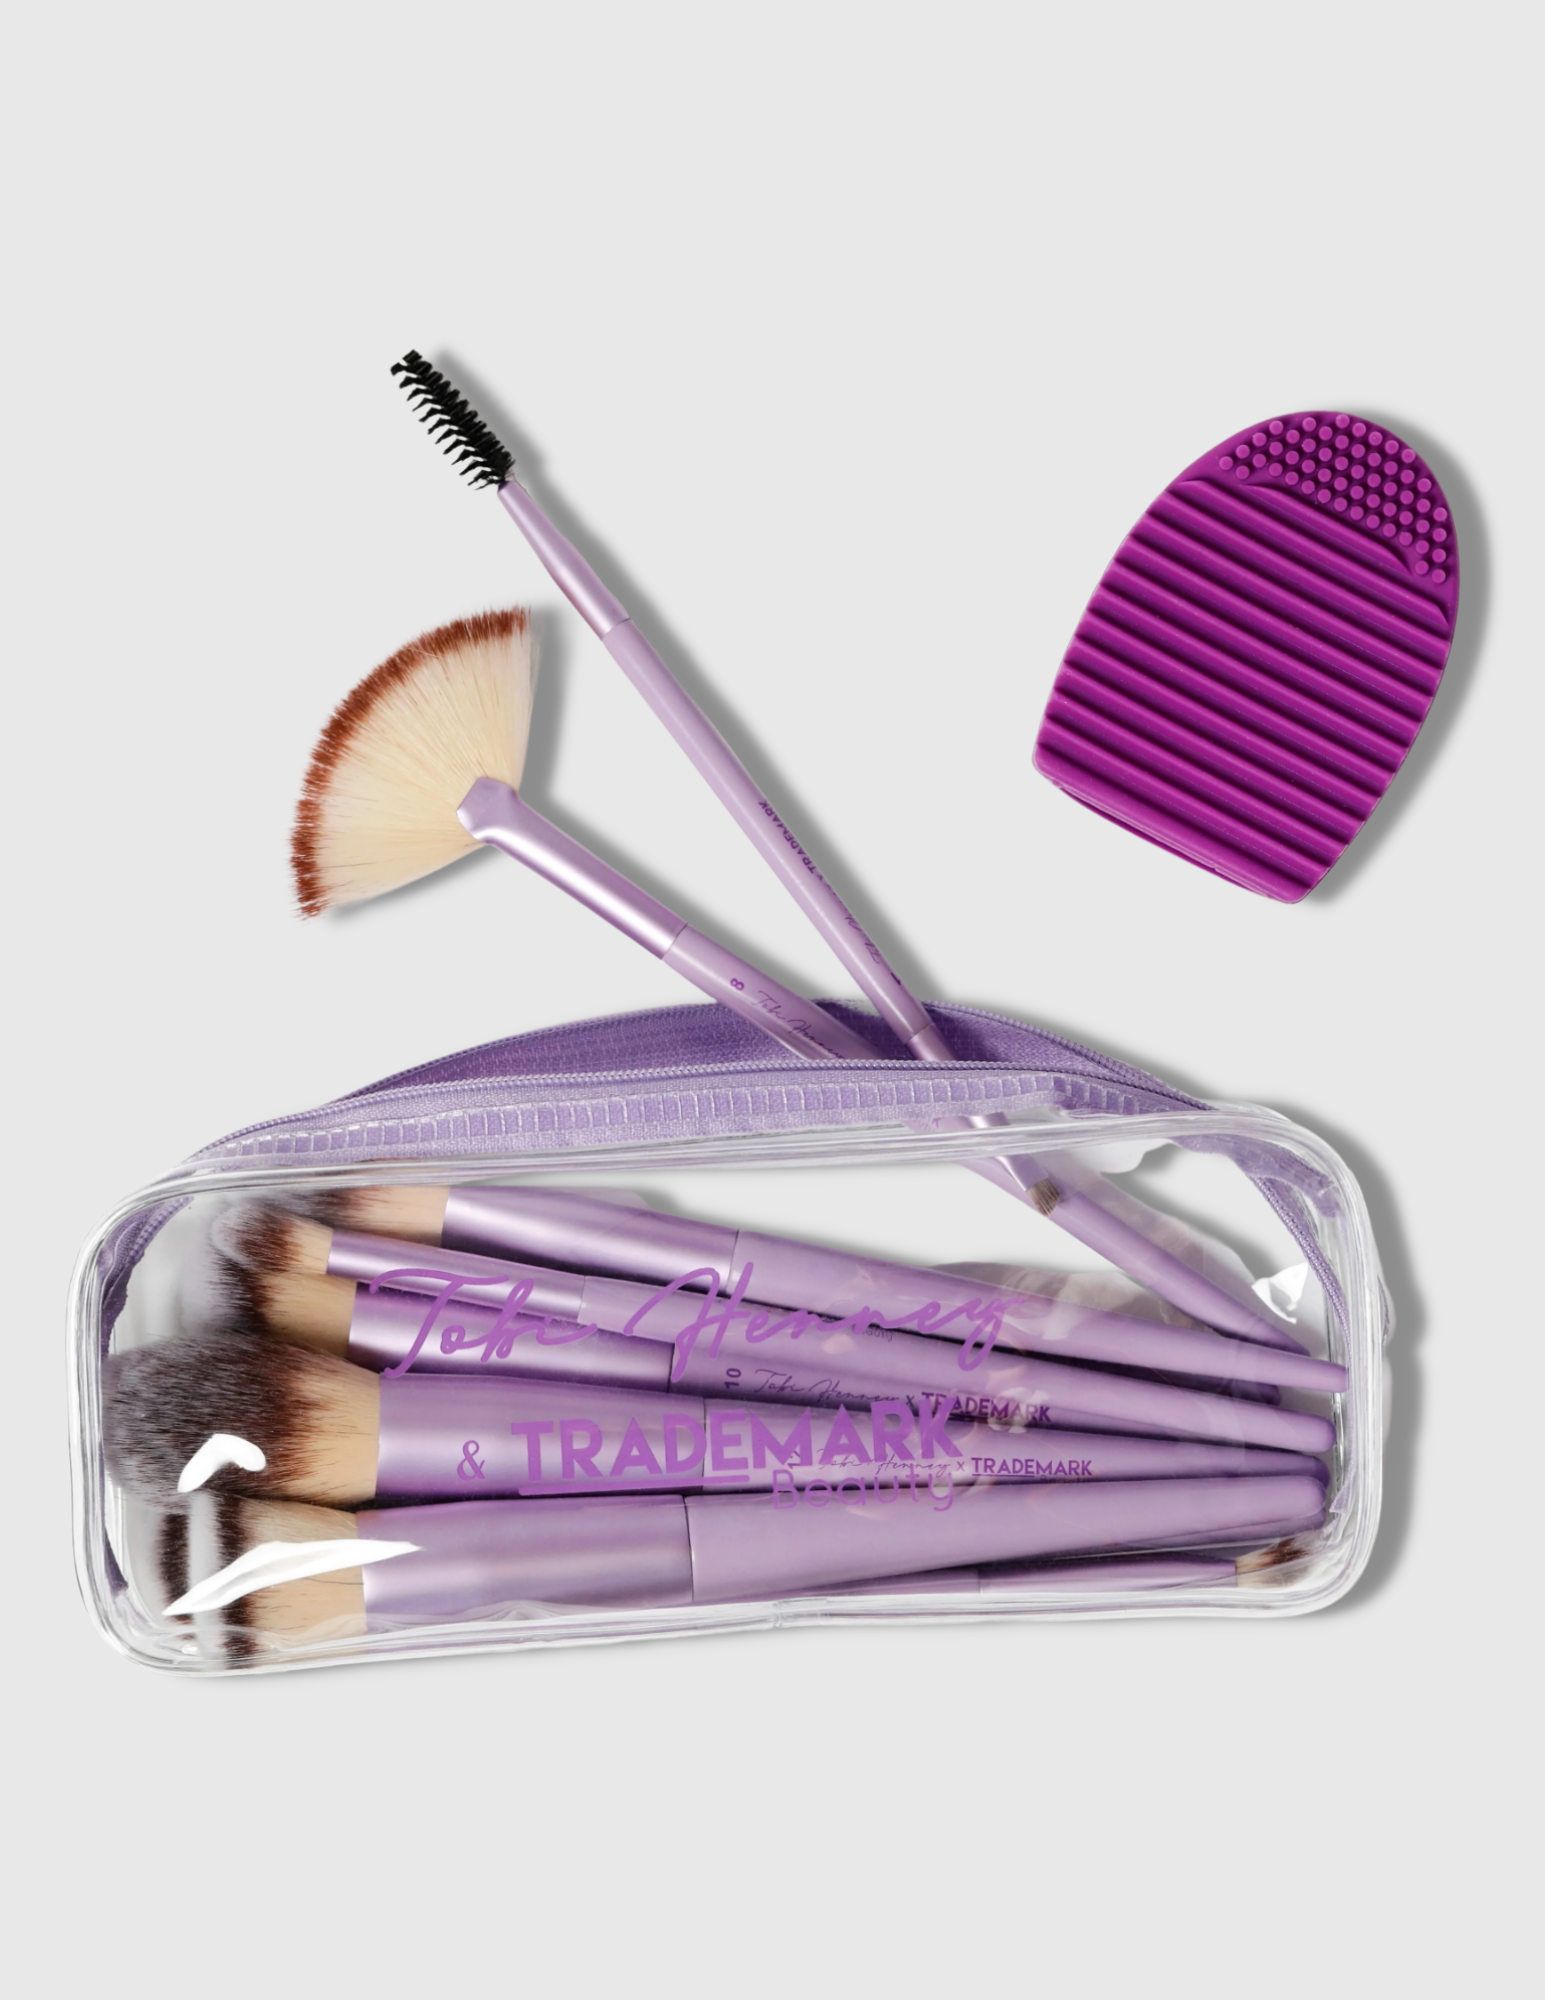 Smudge Makeup Brush - #2 - Trademark Beauty